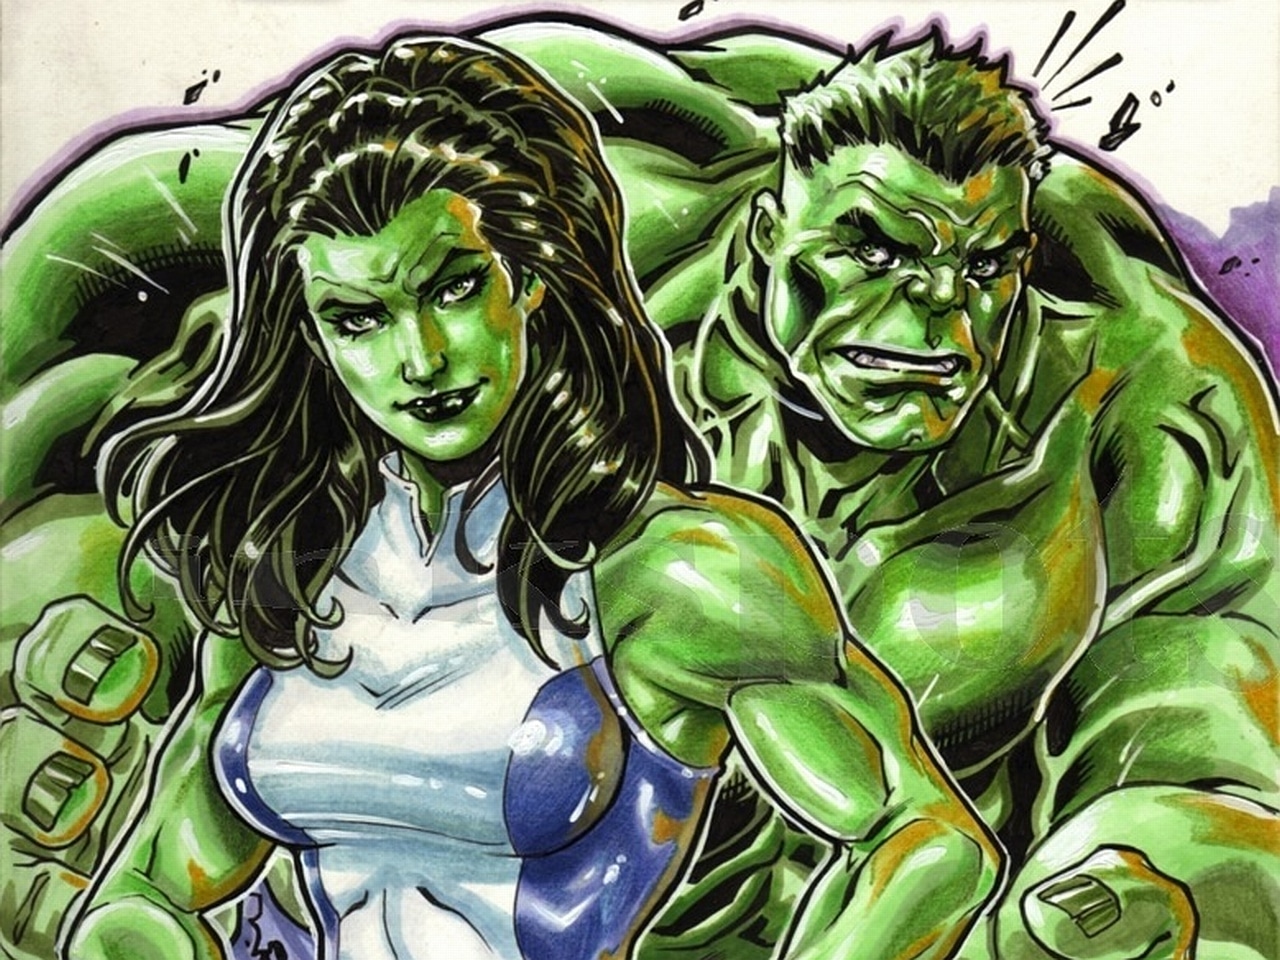 She-Hulk and Hulk